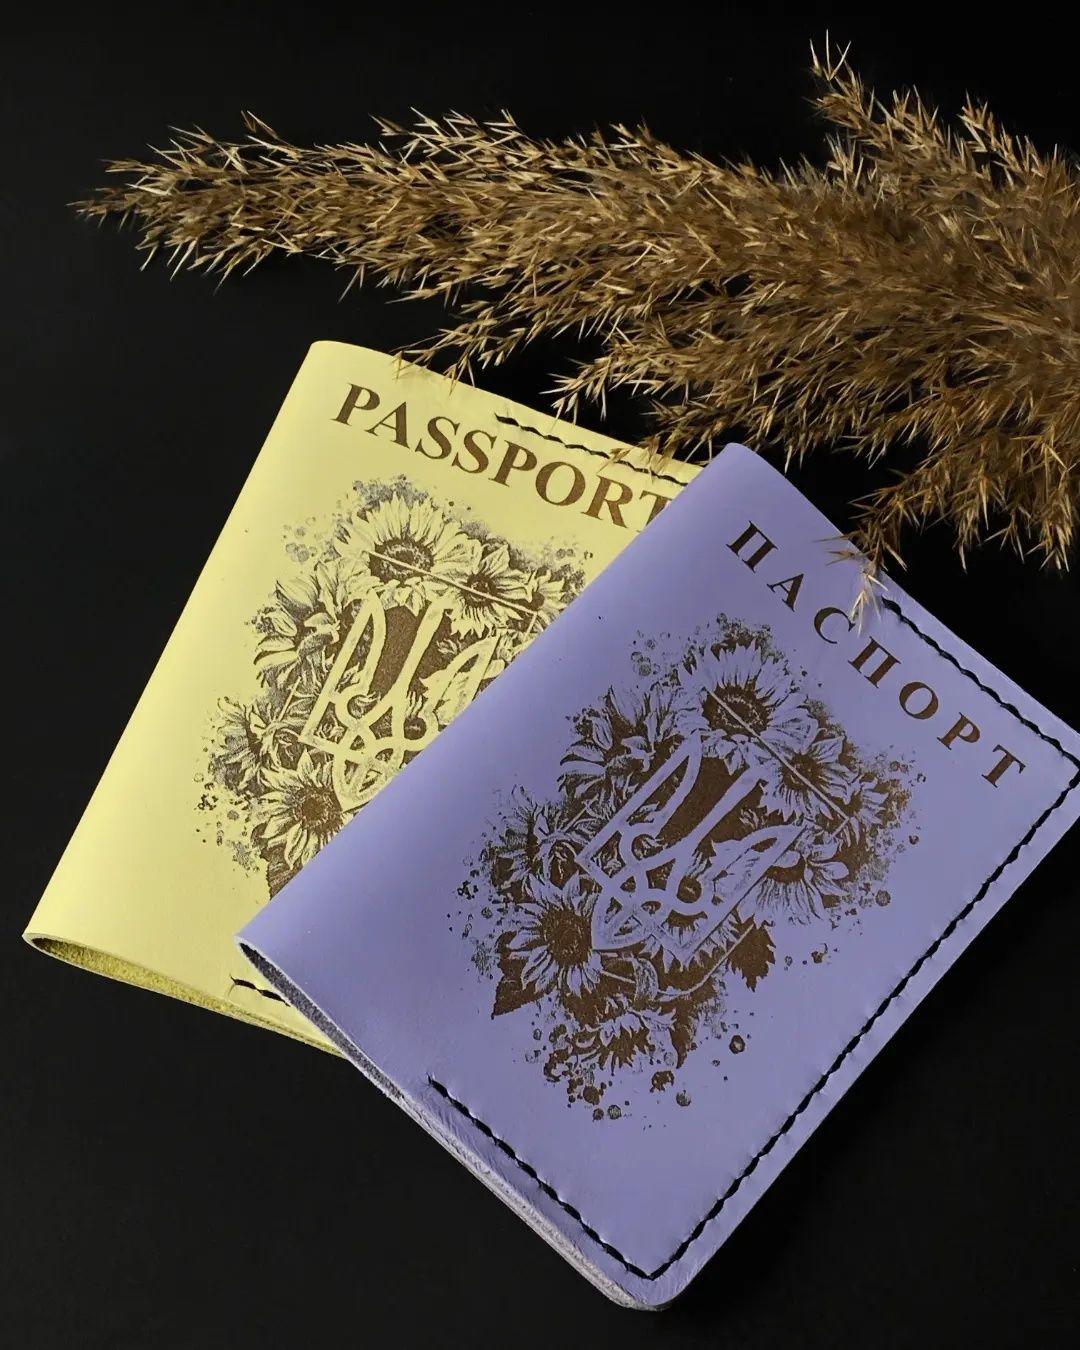 Обкладинка на паспорт, Обложка на паспорт, Обгортка на паспорт